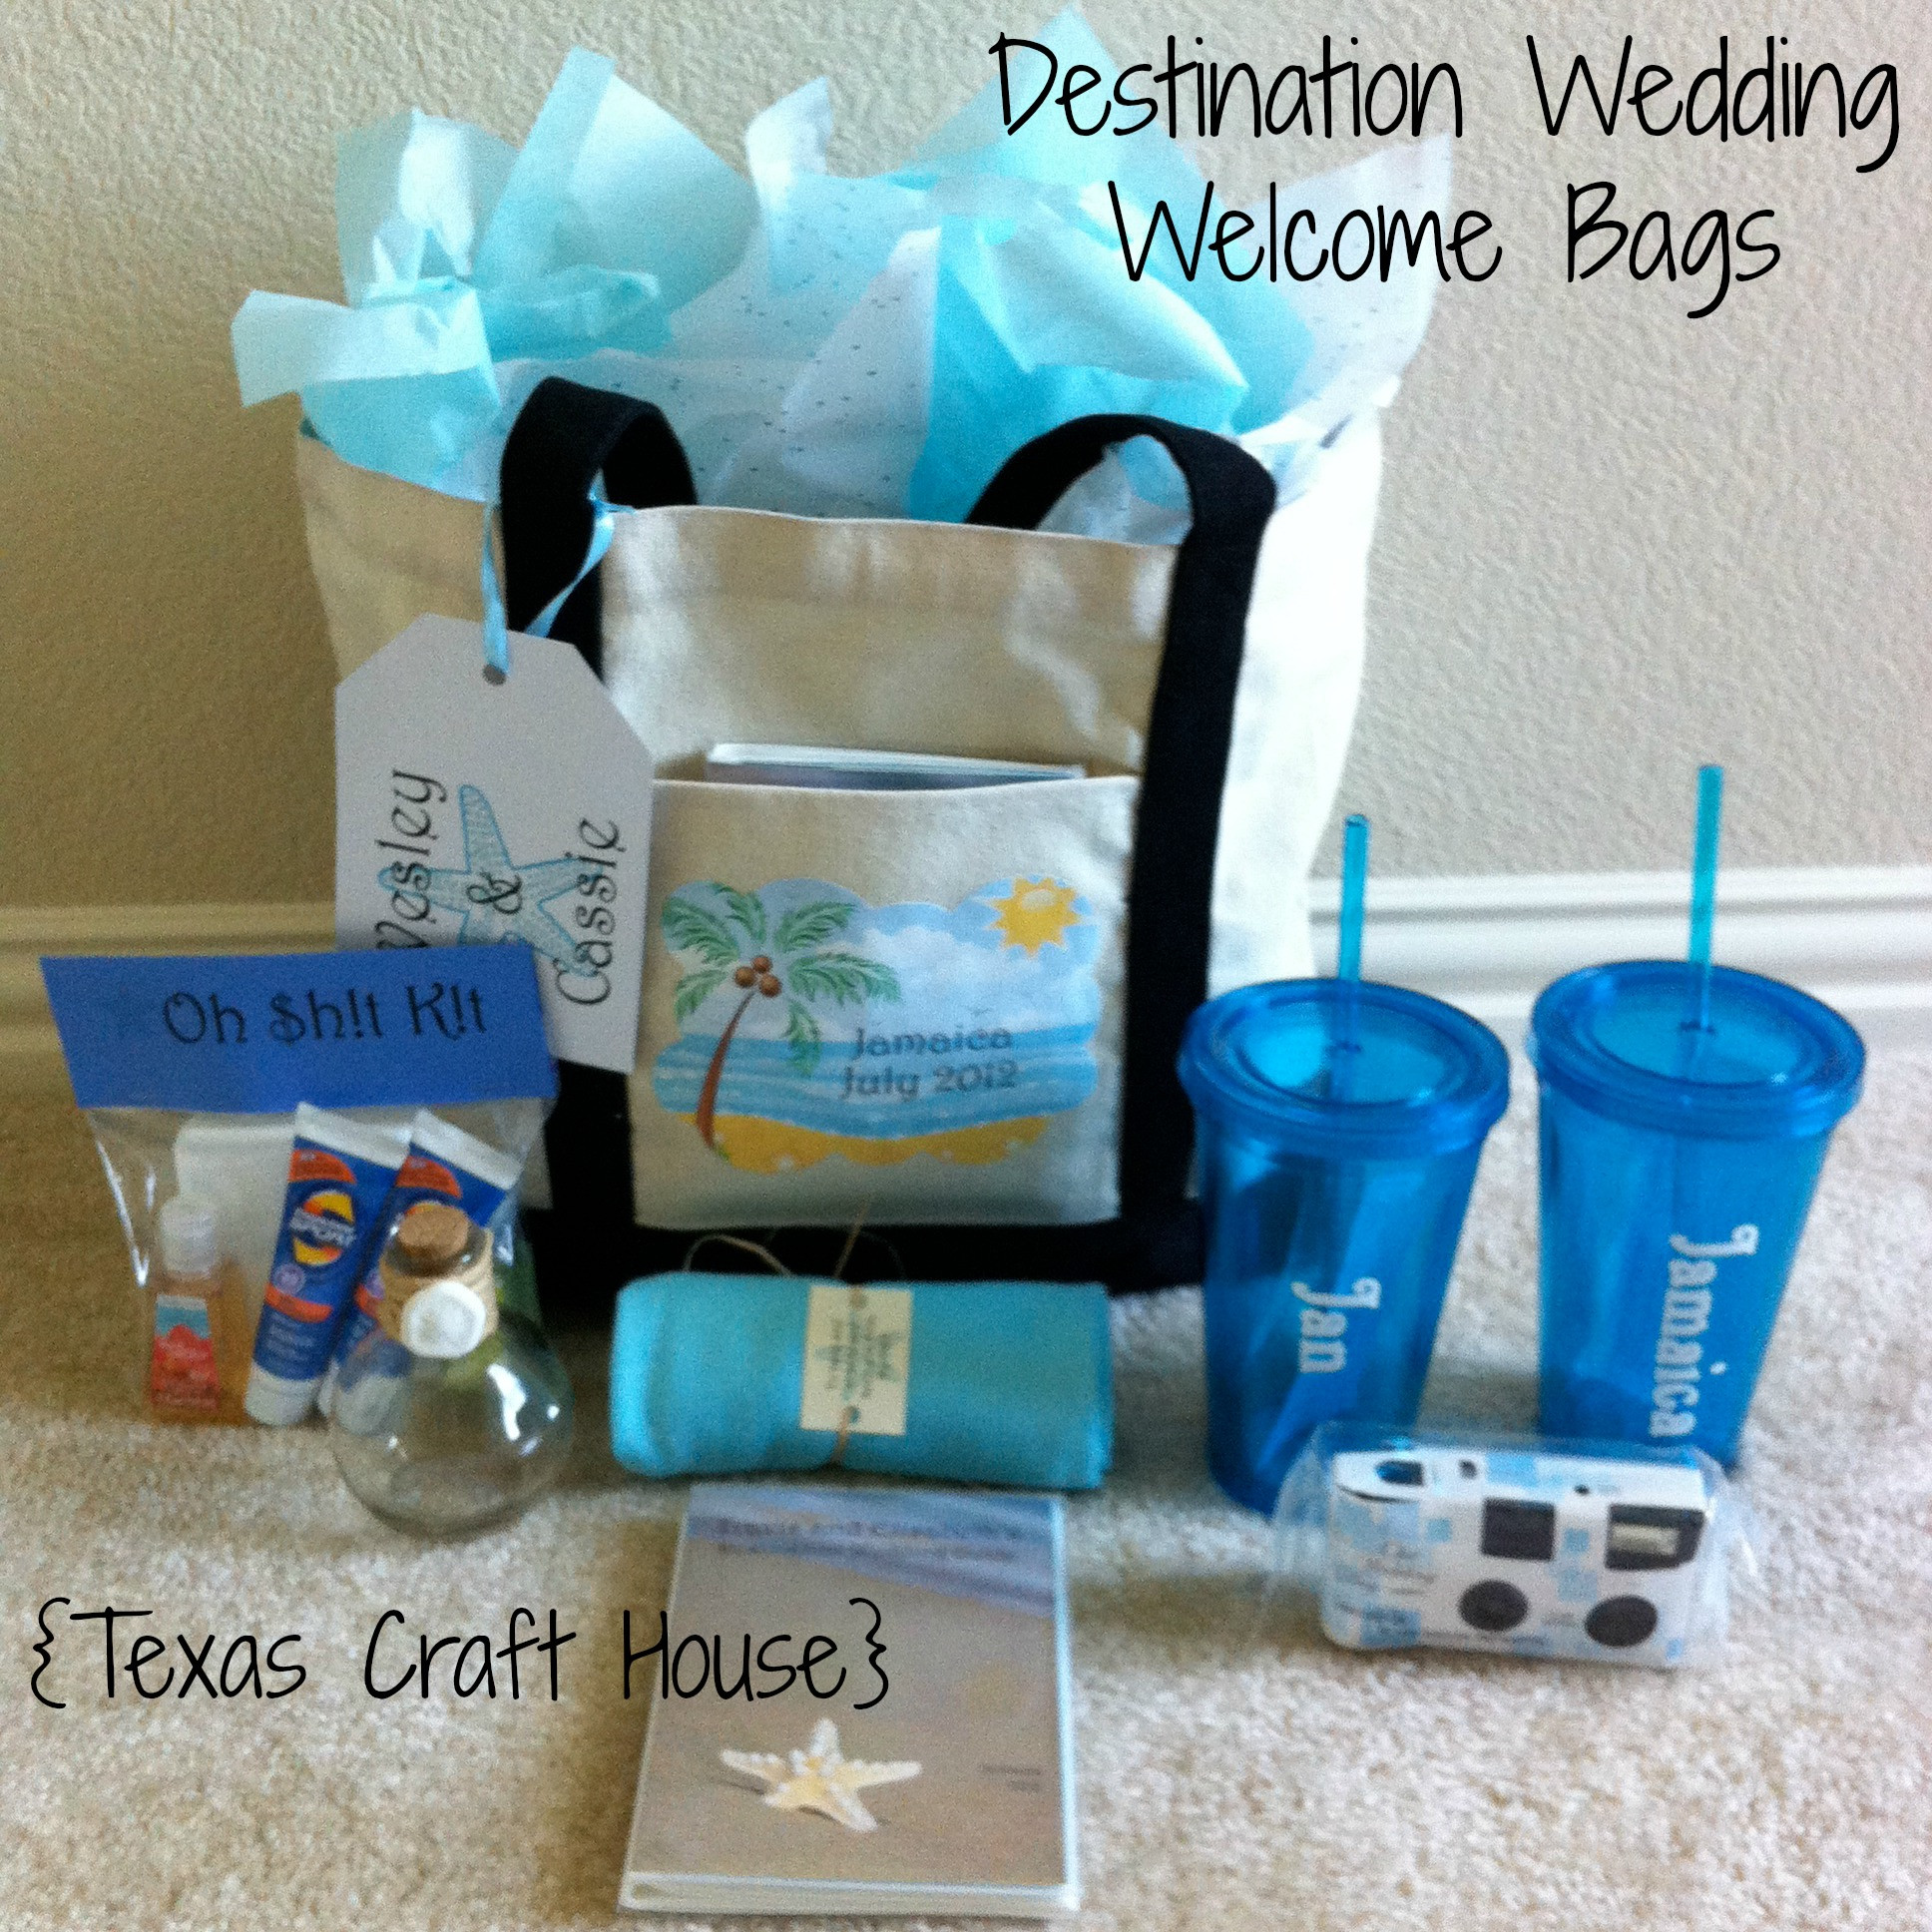 Best ideas about Destination Wedding Gift Ideas
. Save or Pin Destination Wedding Wel e Bags – DIY Now.